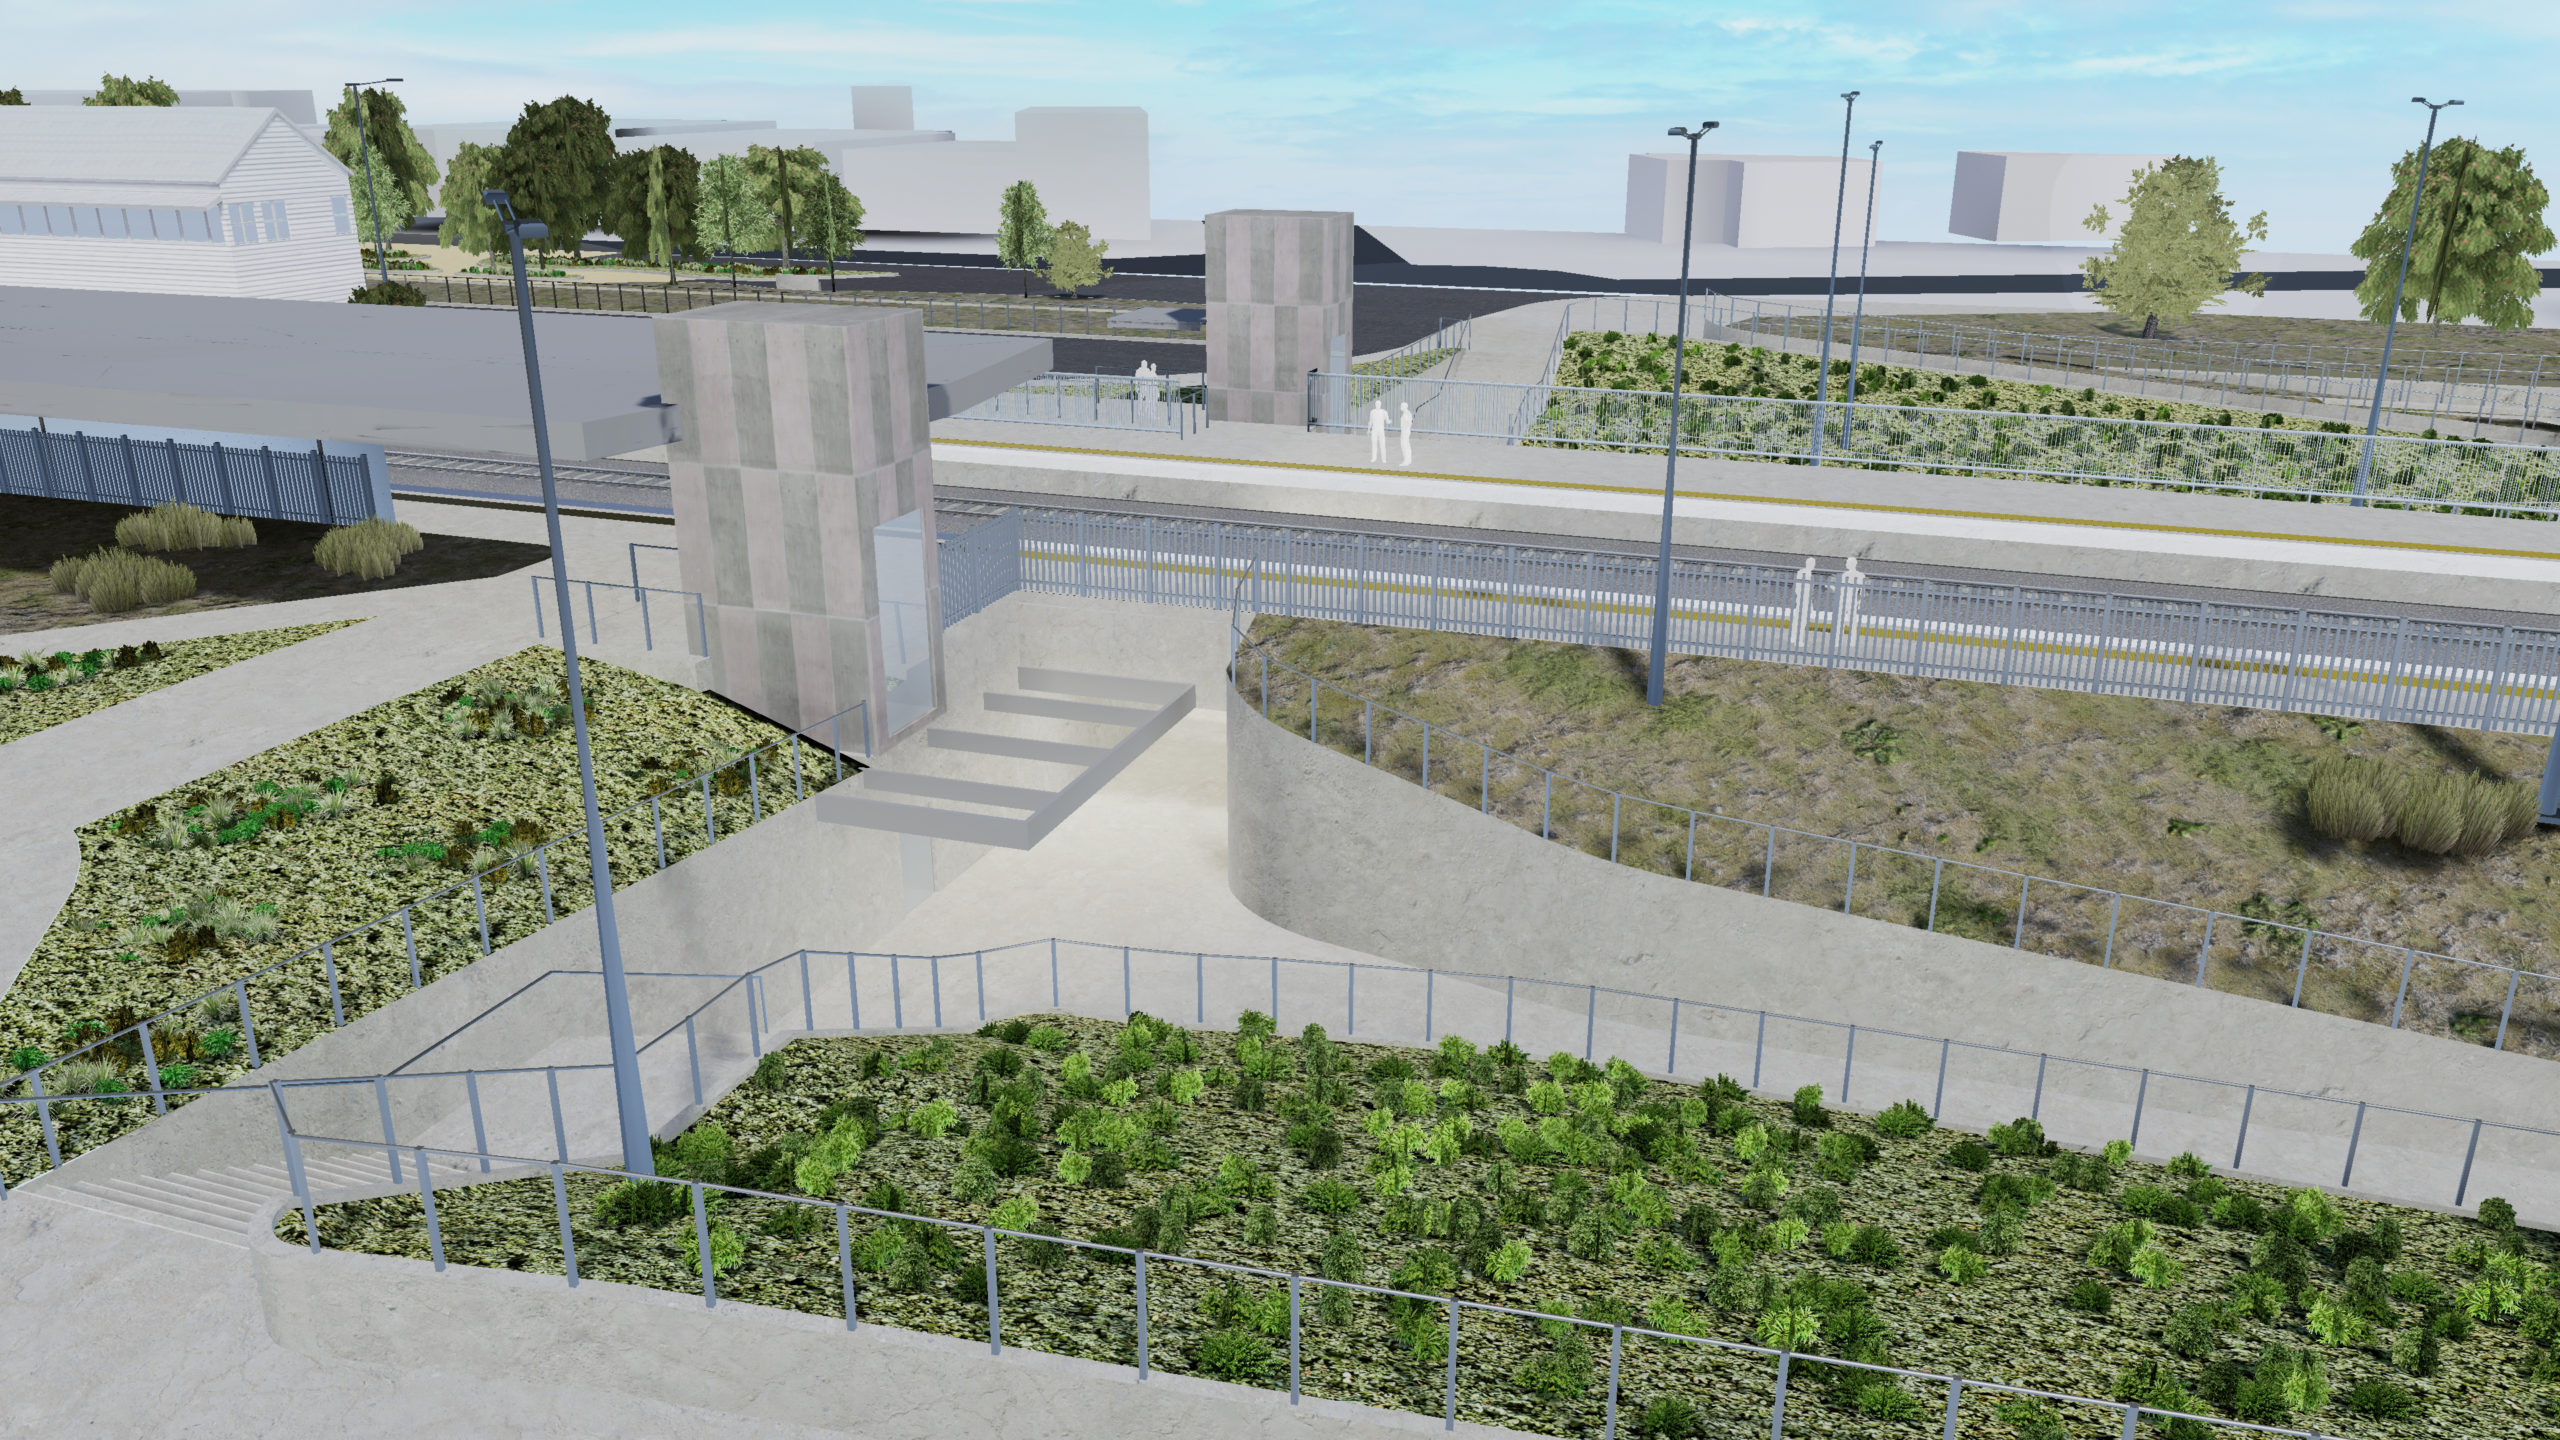 Visualisation showing design of Wangaratta Station pedestrian underpass